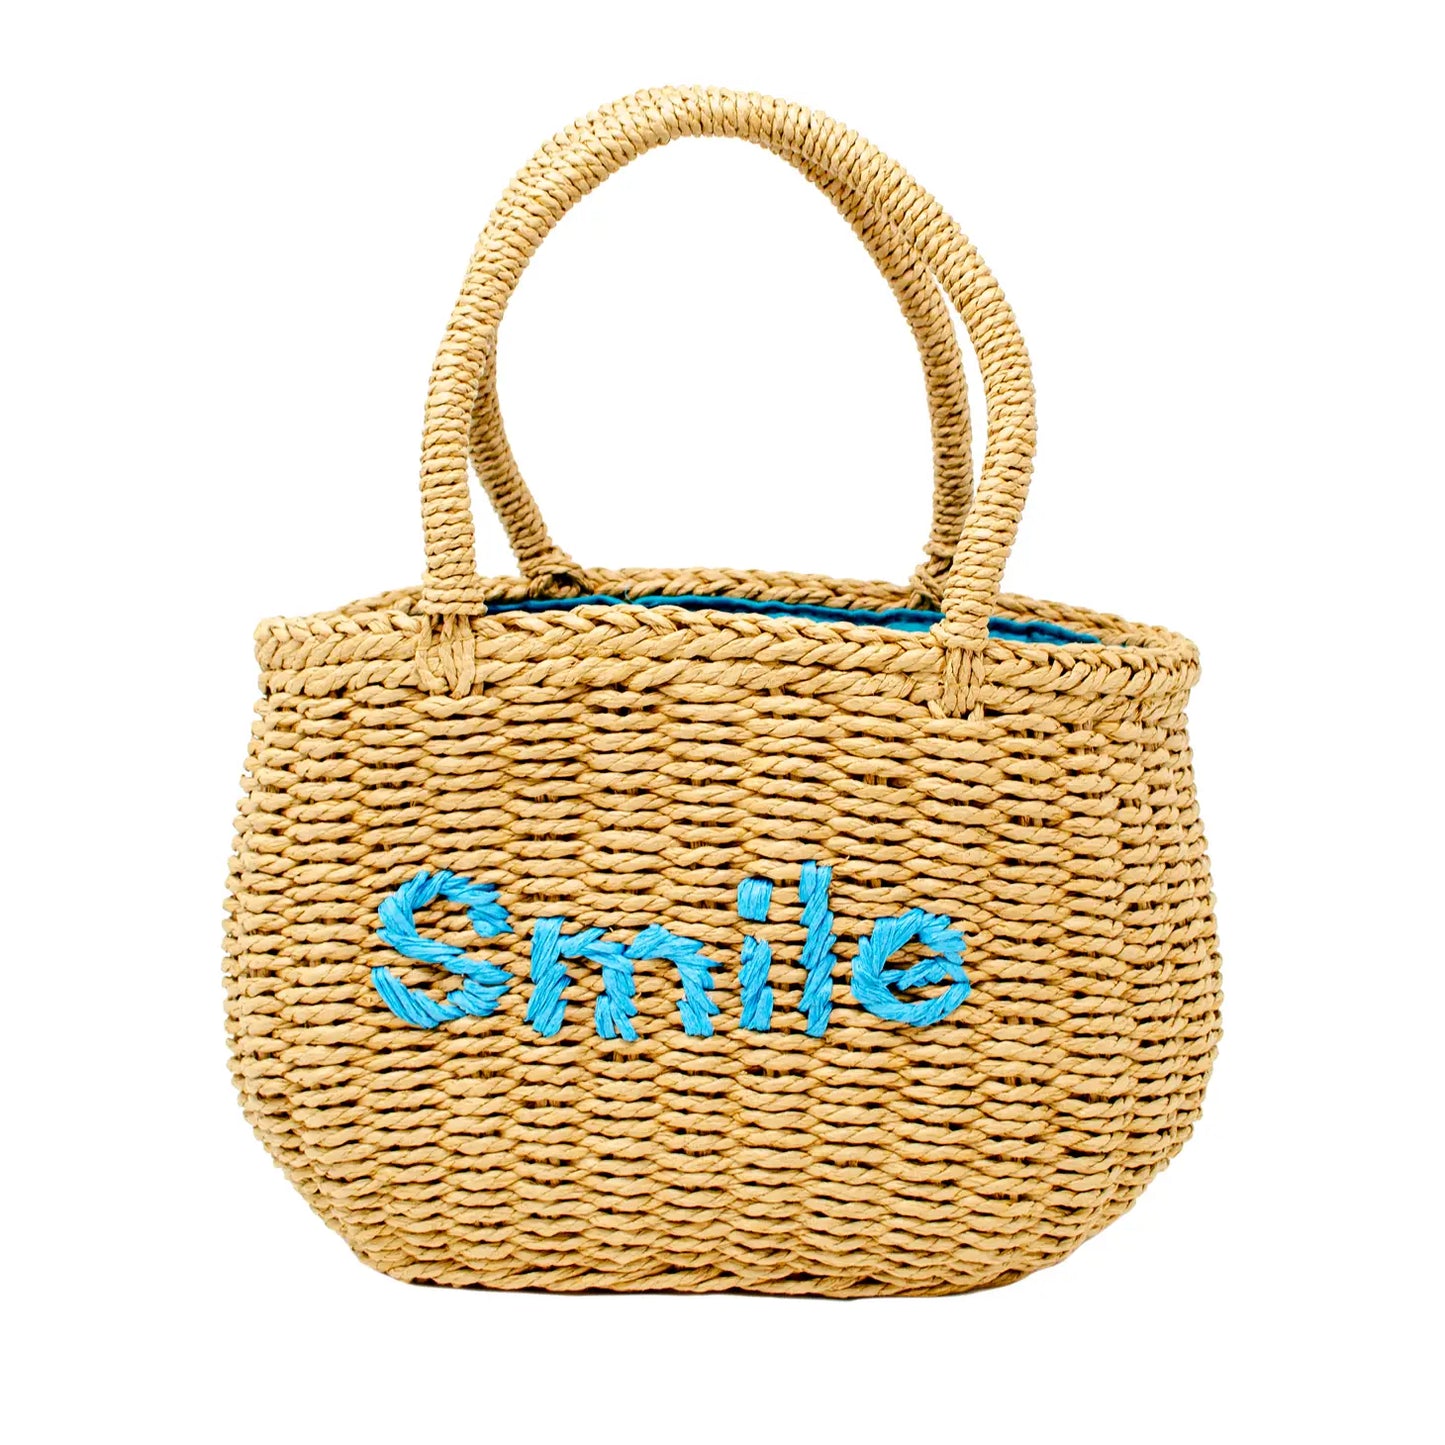 Wicker Basket "Smile" Bag - Turquoise